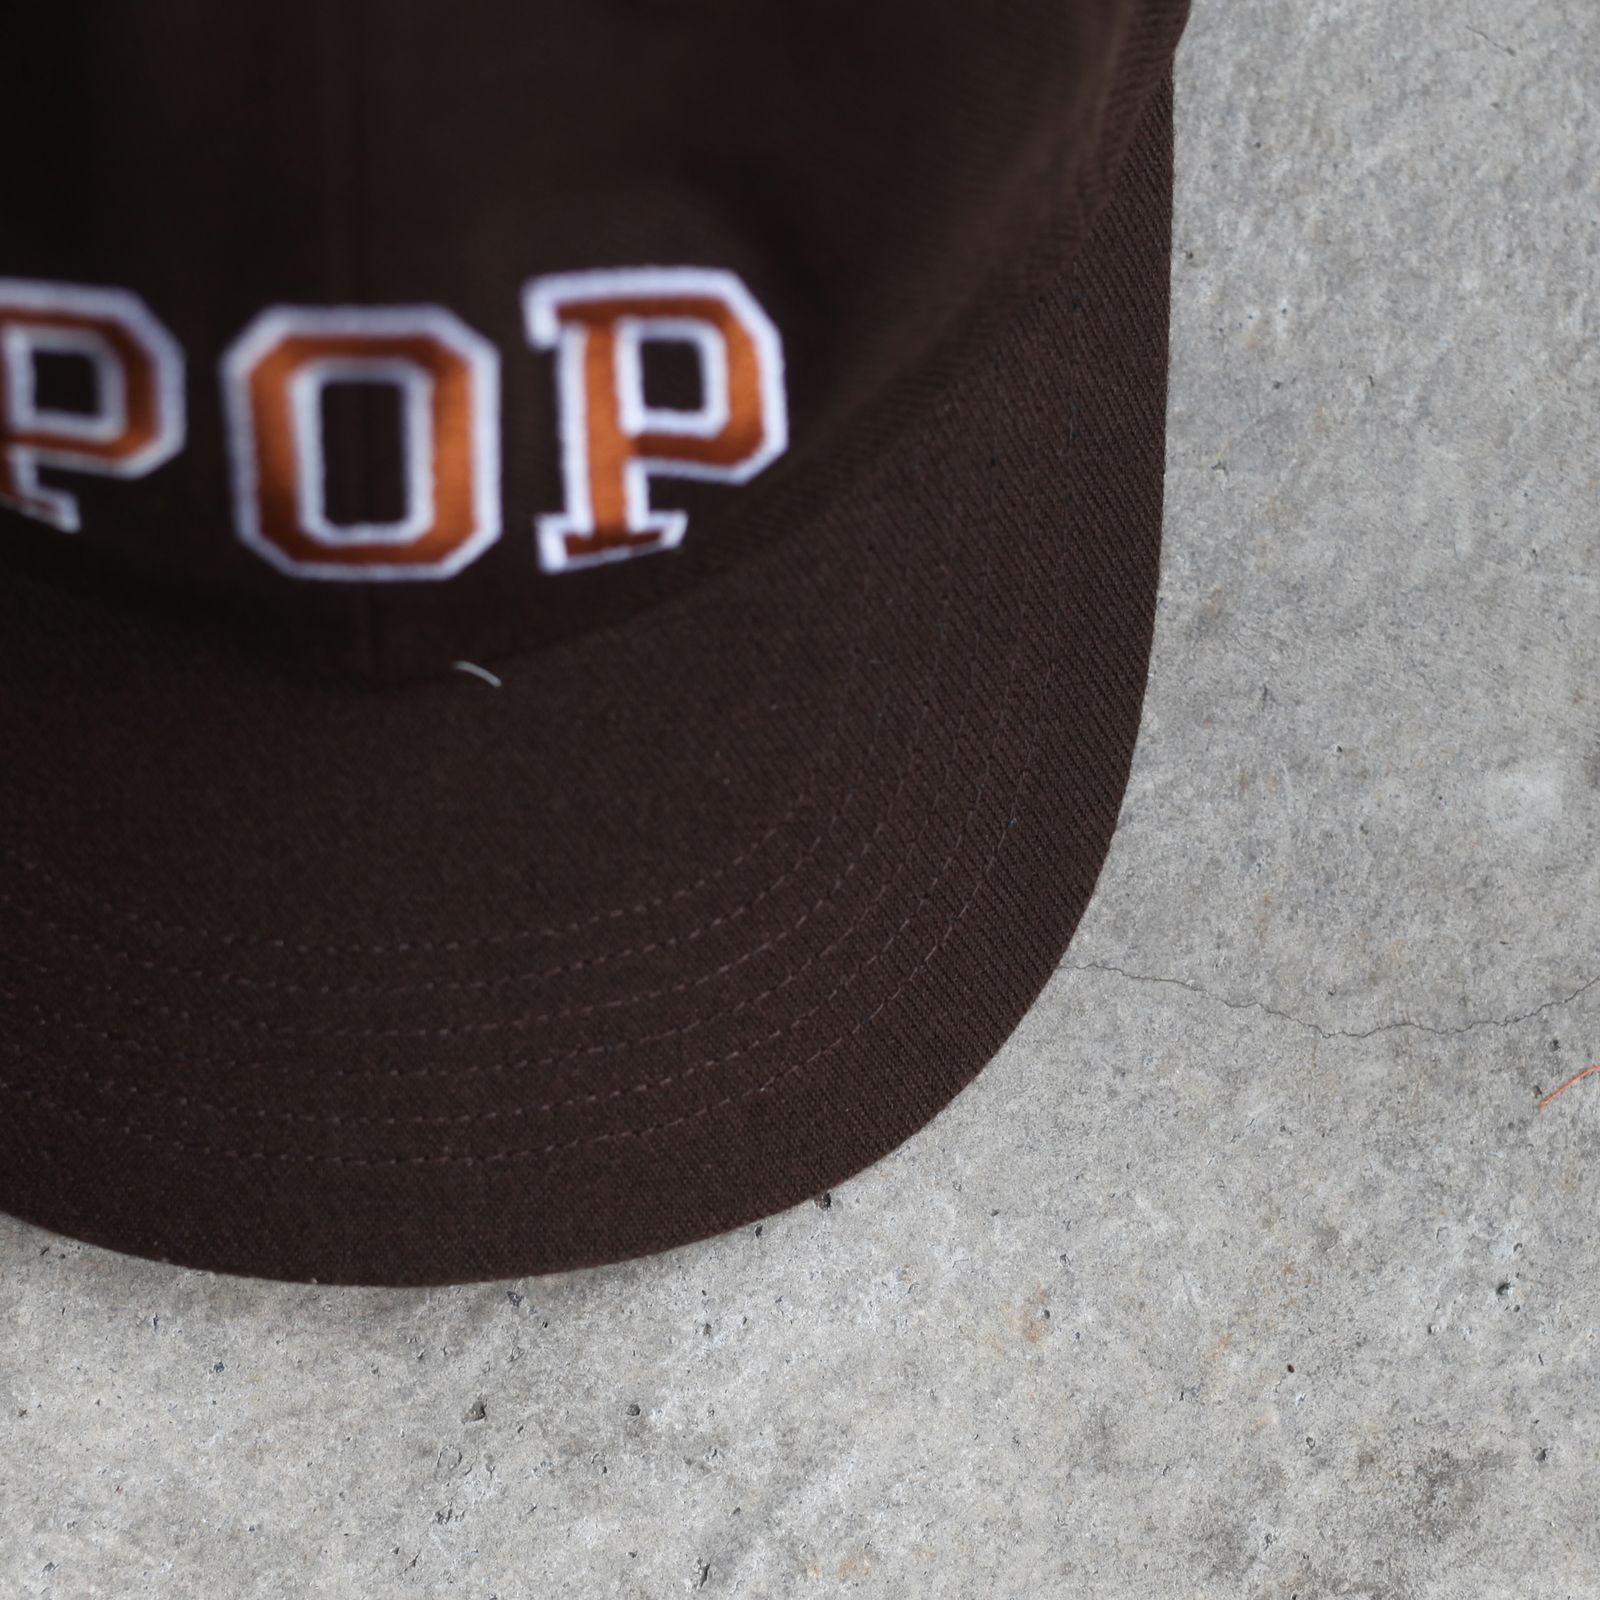 Pop Trading Company - 【残りわずか】Arch Sixpanel Hat | ACRMTSM